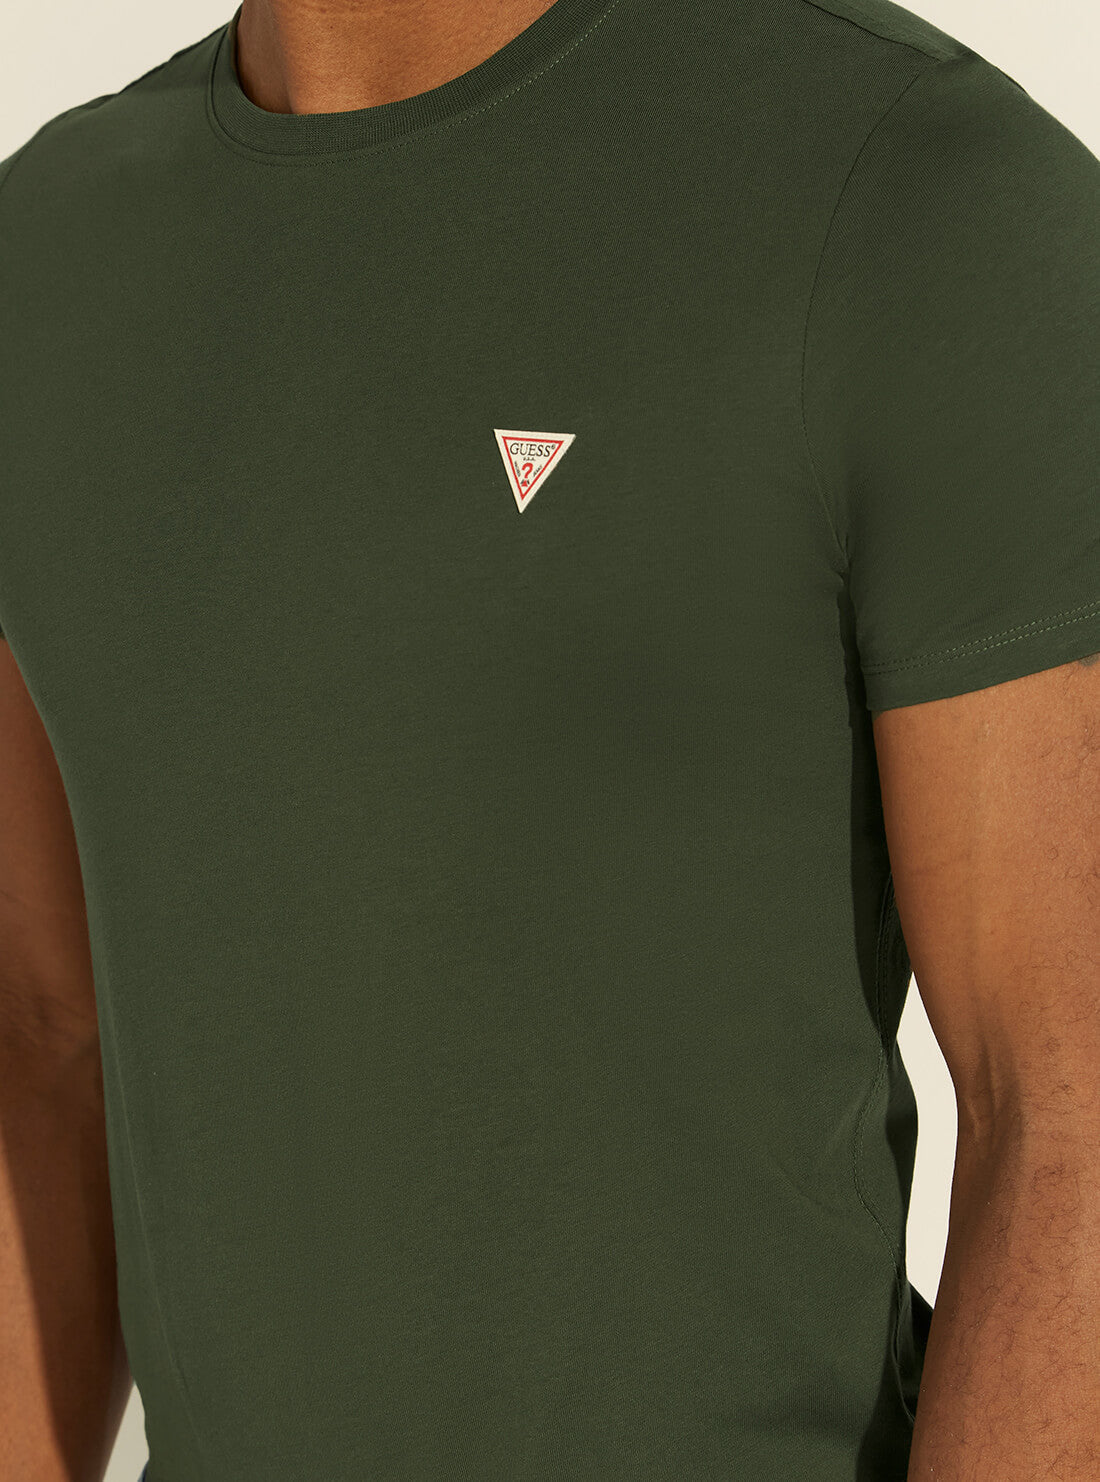 GUESS Mens Olive Slim Fit Logo T-Shirt M1RI36I3Z11 Detail View